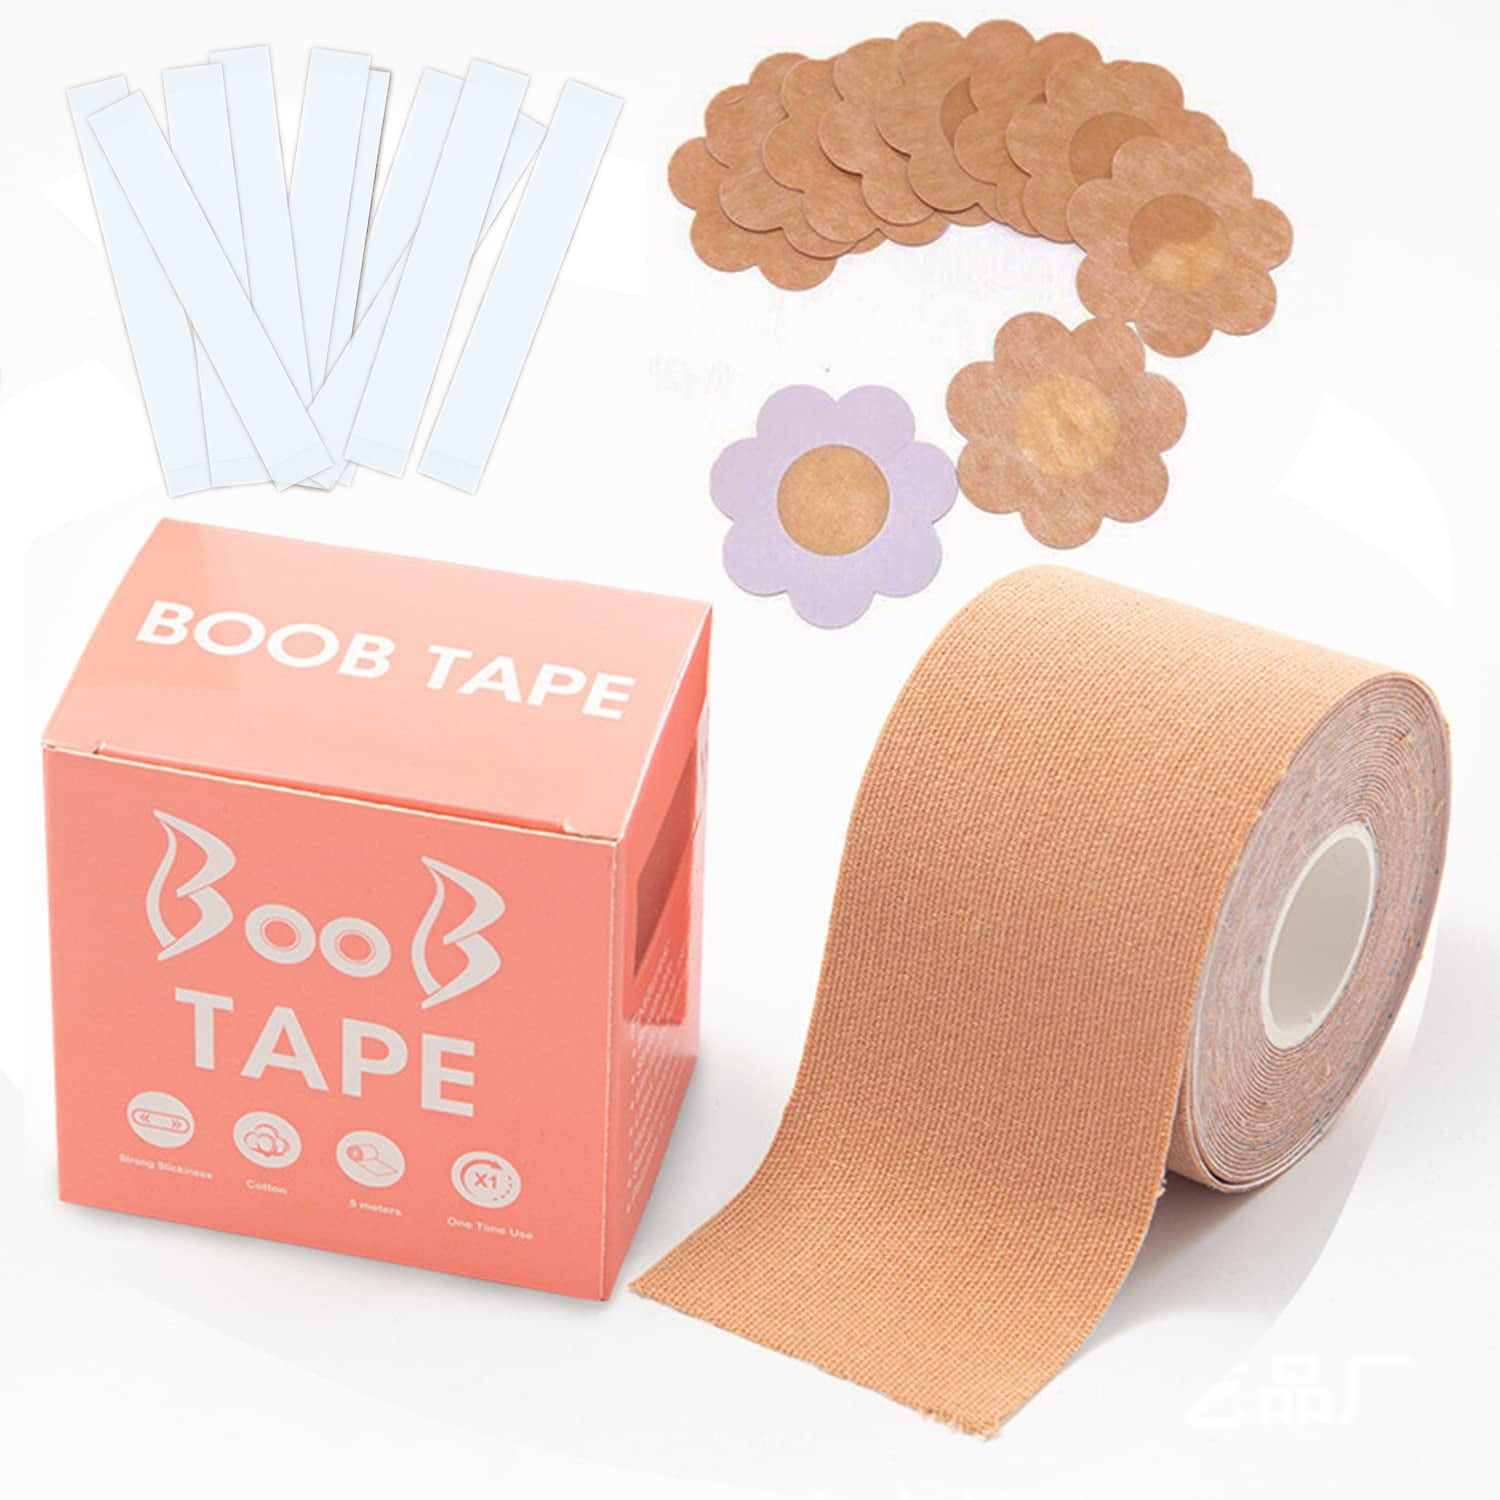  Breast Lift Tape Boob Tape Body Tape Strapless